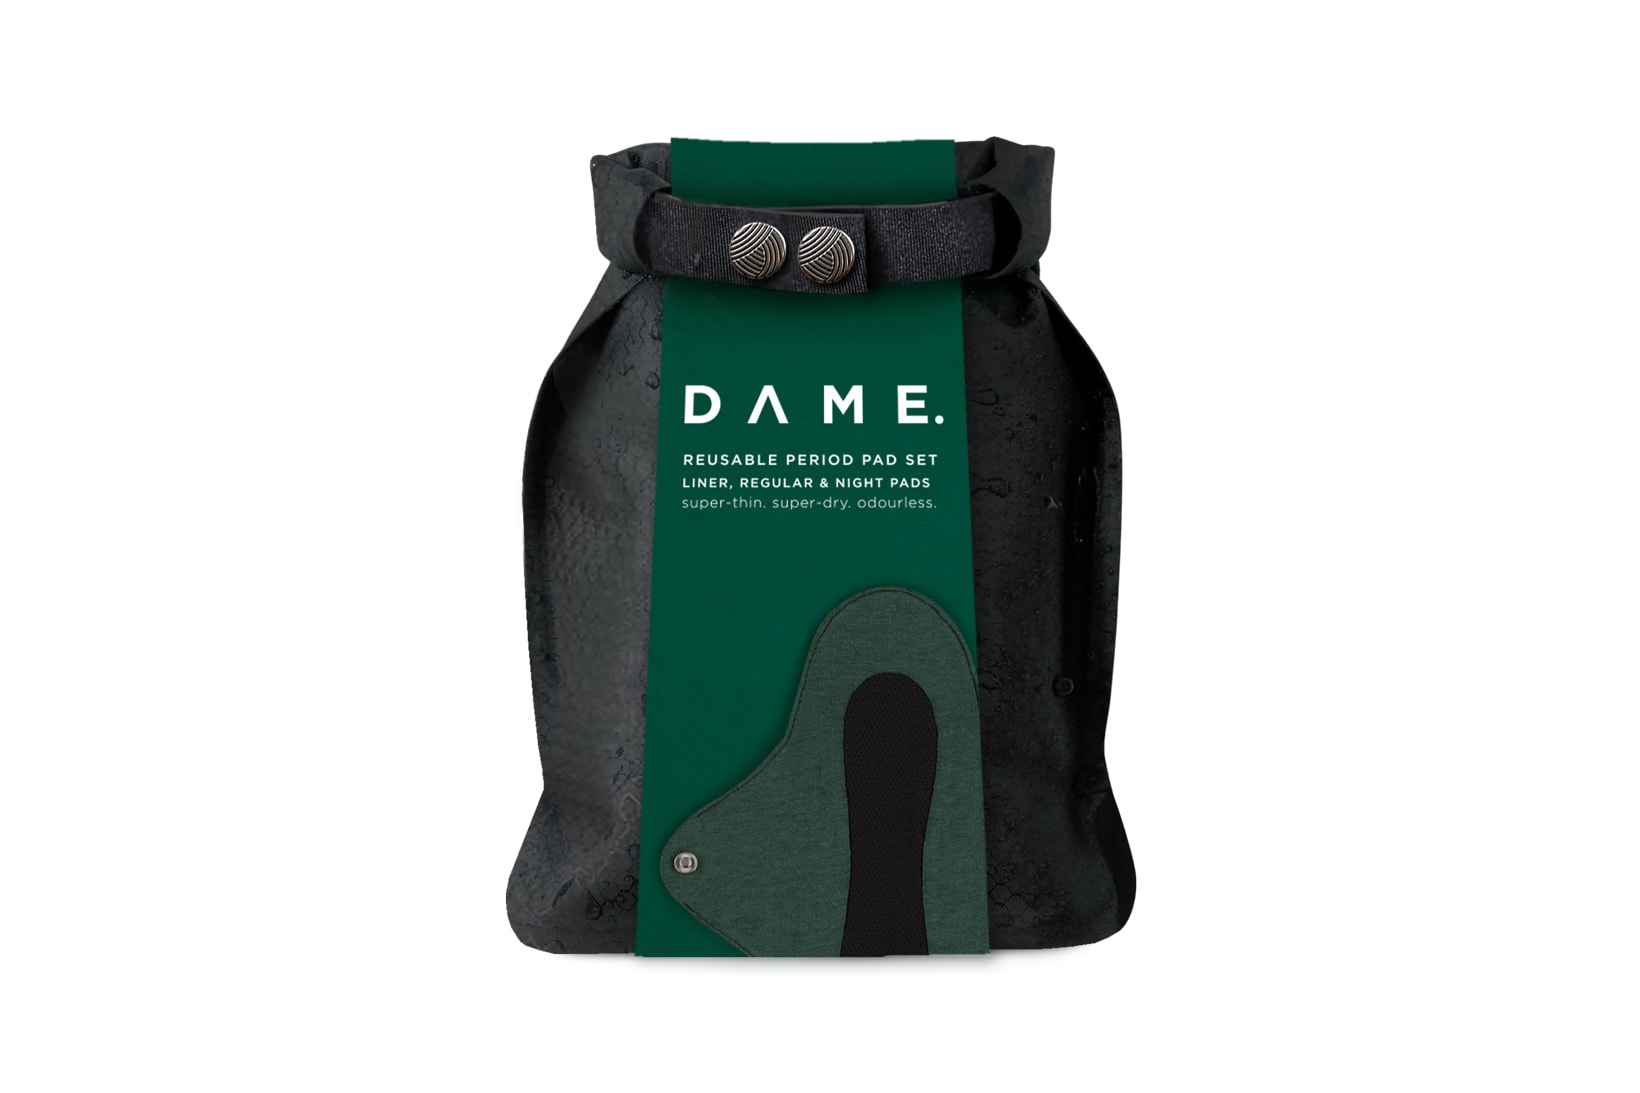 DAME Reusable Period Pad Dry Bag